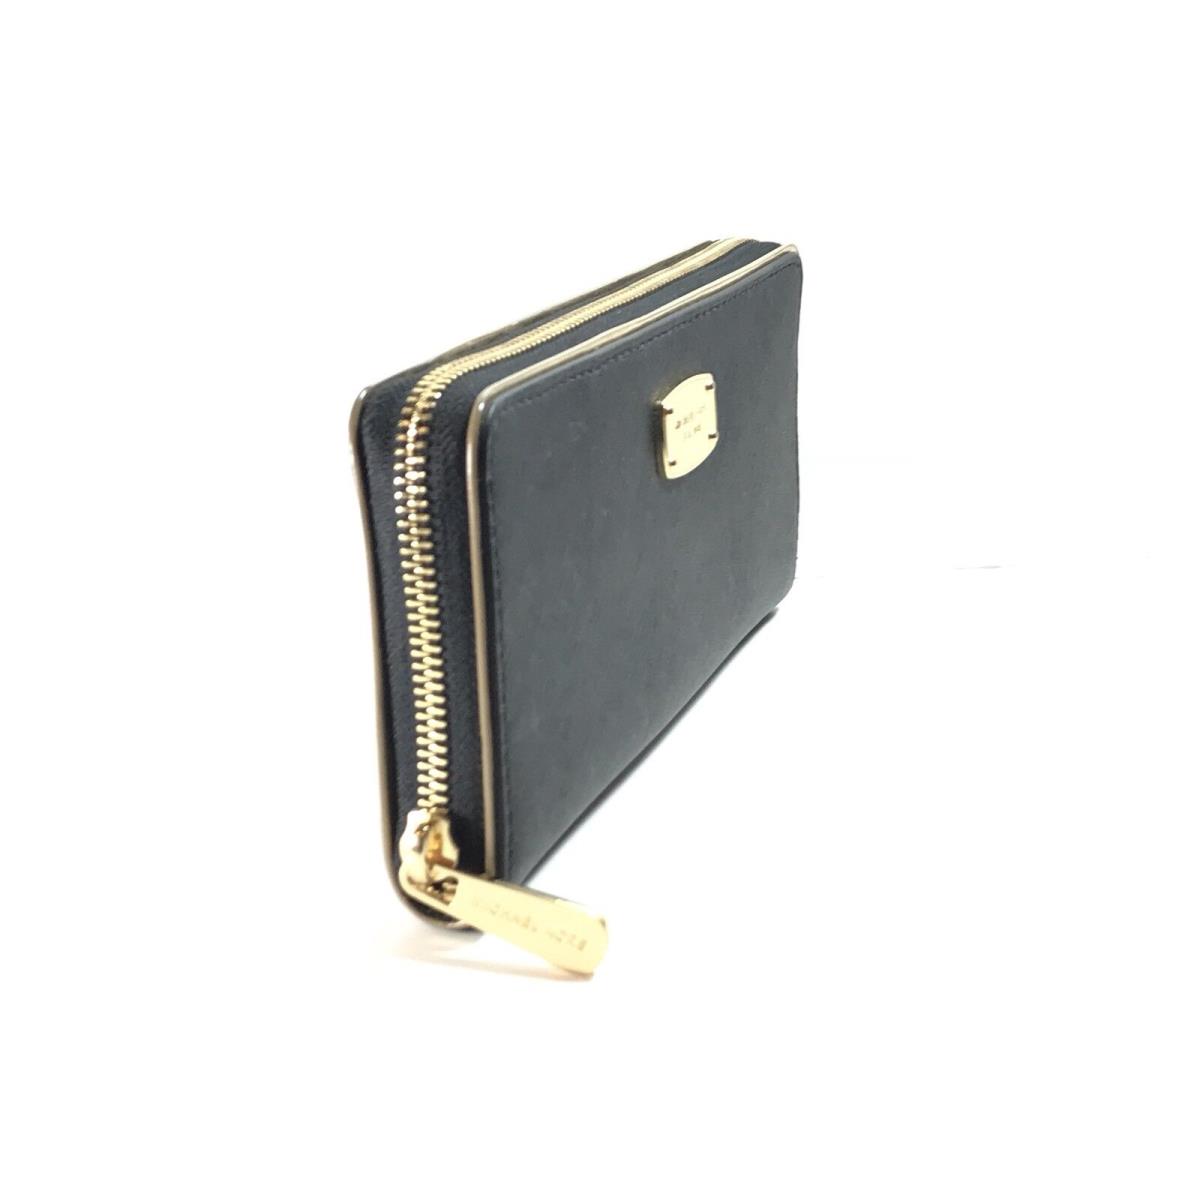 Michael Kors Saffiano Frame ZA Continental Wallet Gold/black